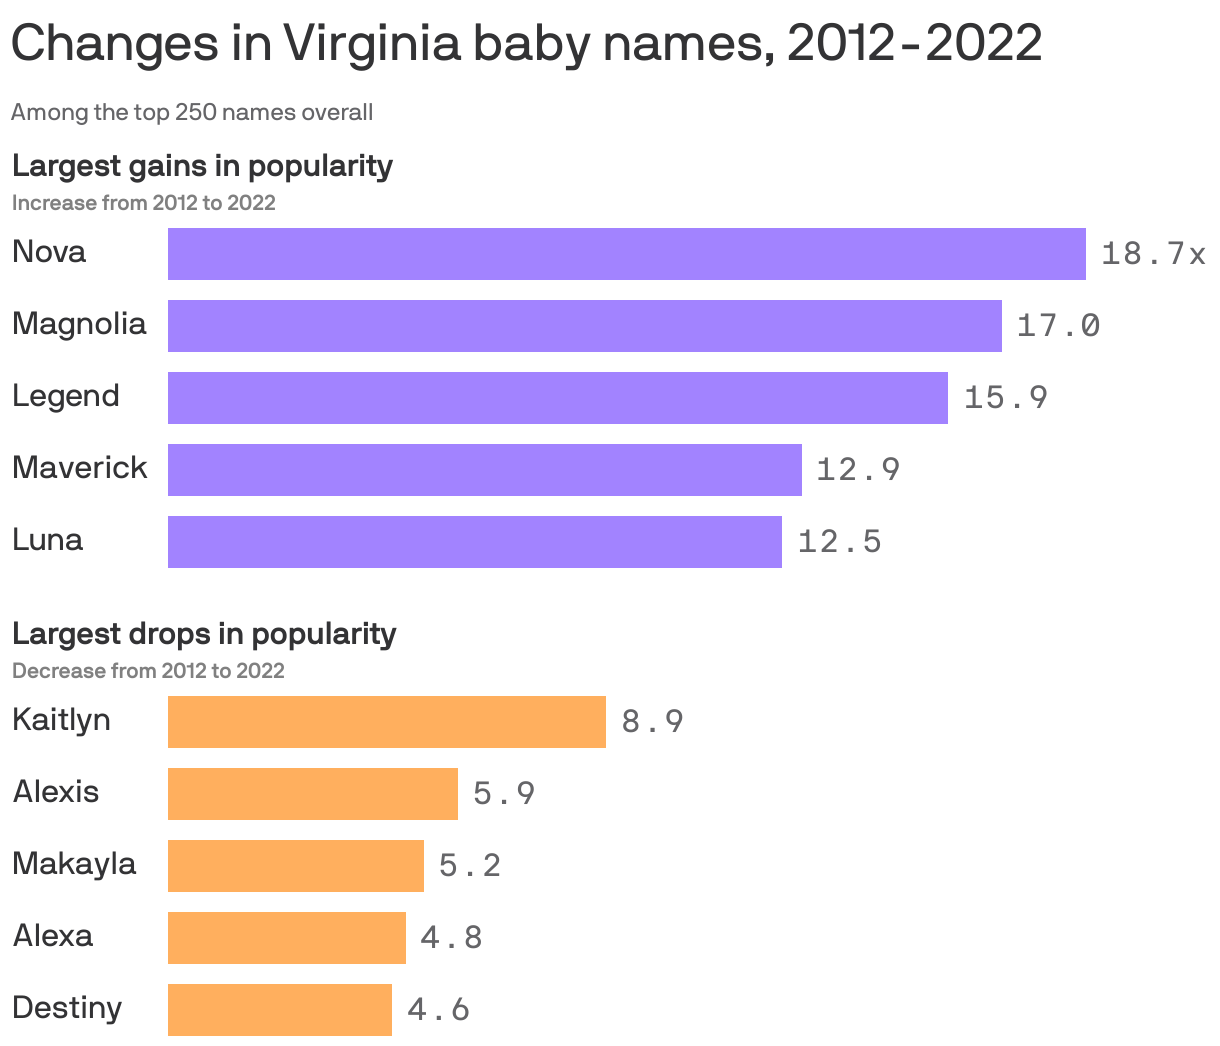 Changes in Virginia baby names, 2012-2022